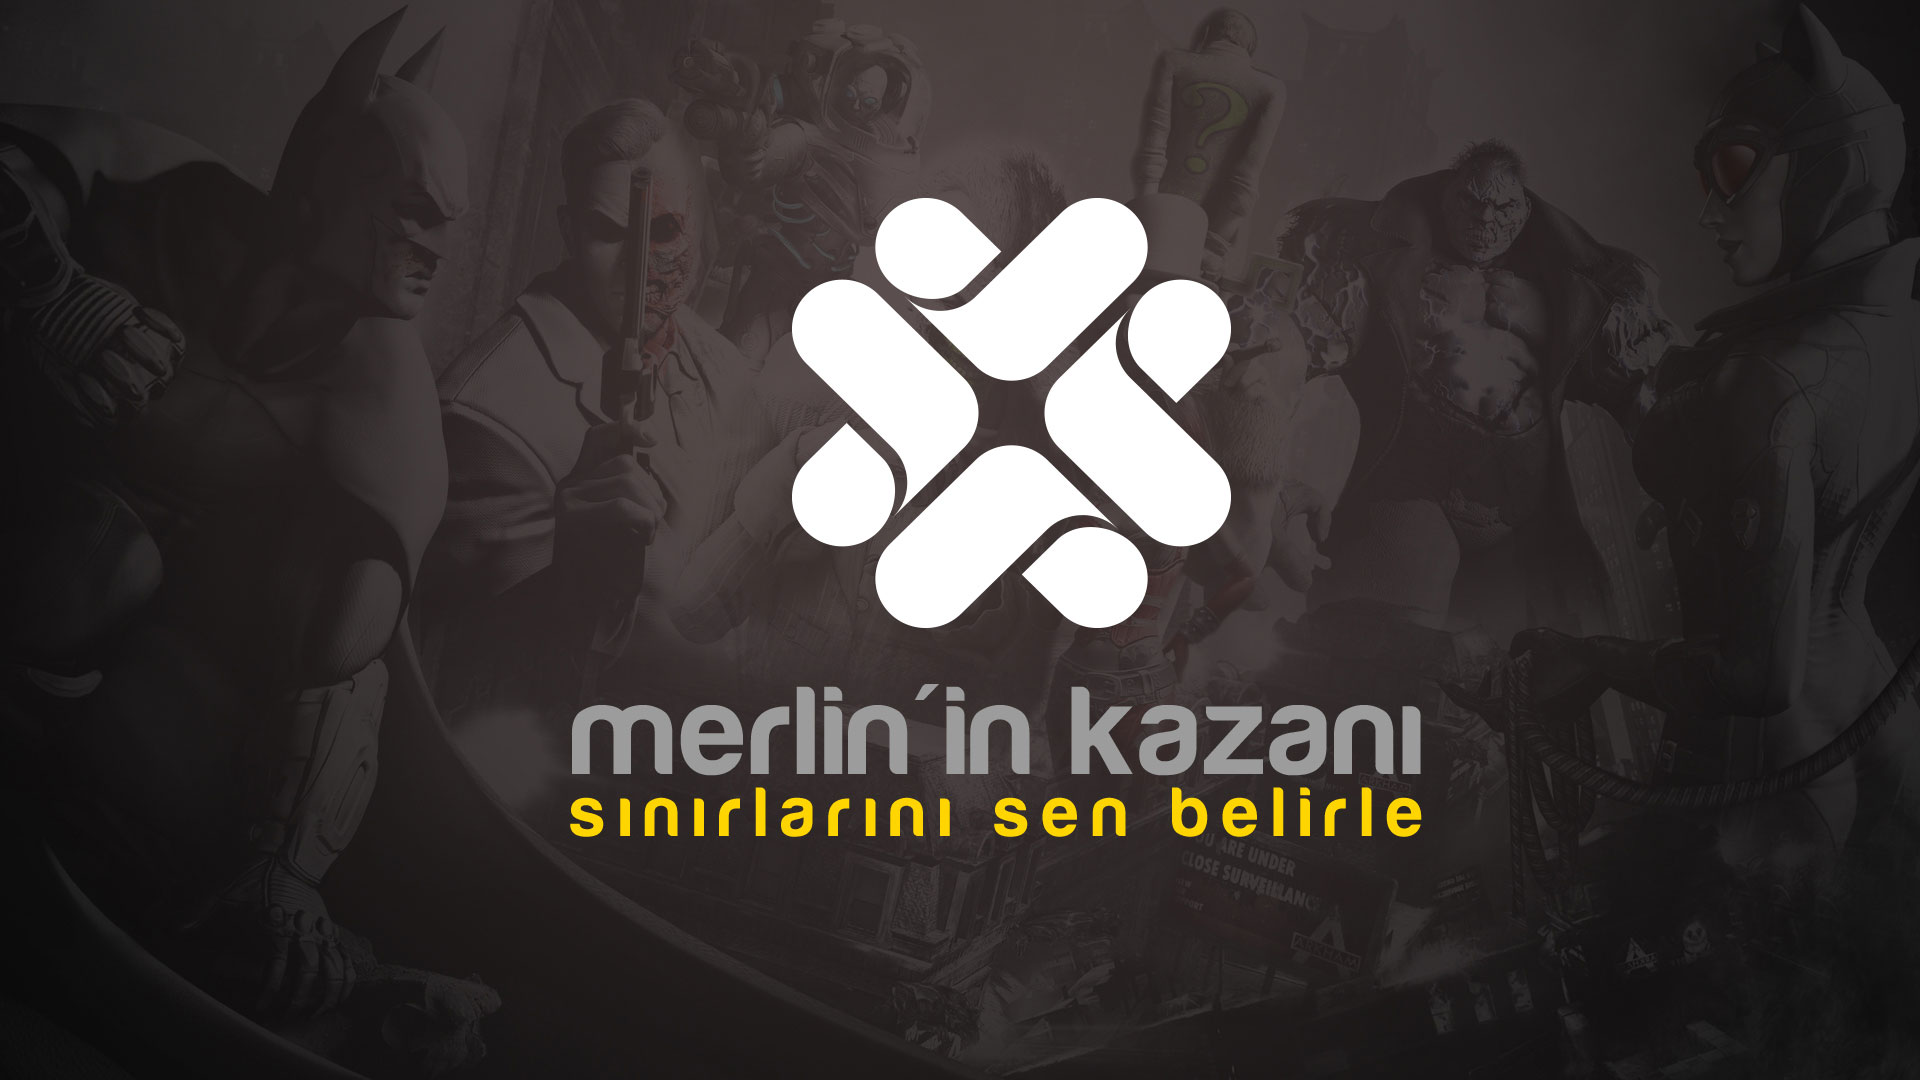 (c) Merlininkazani.com